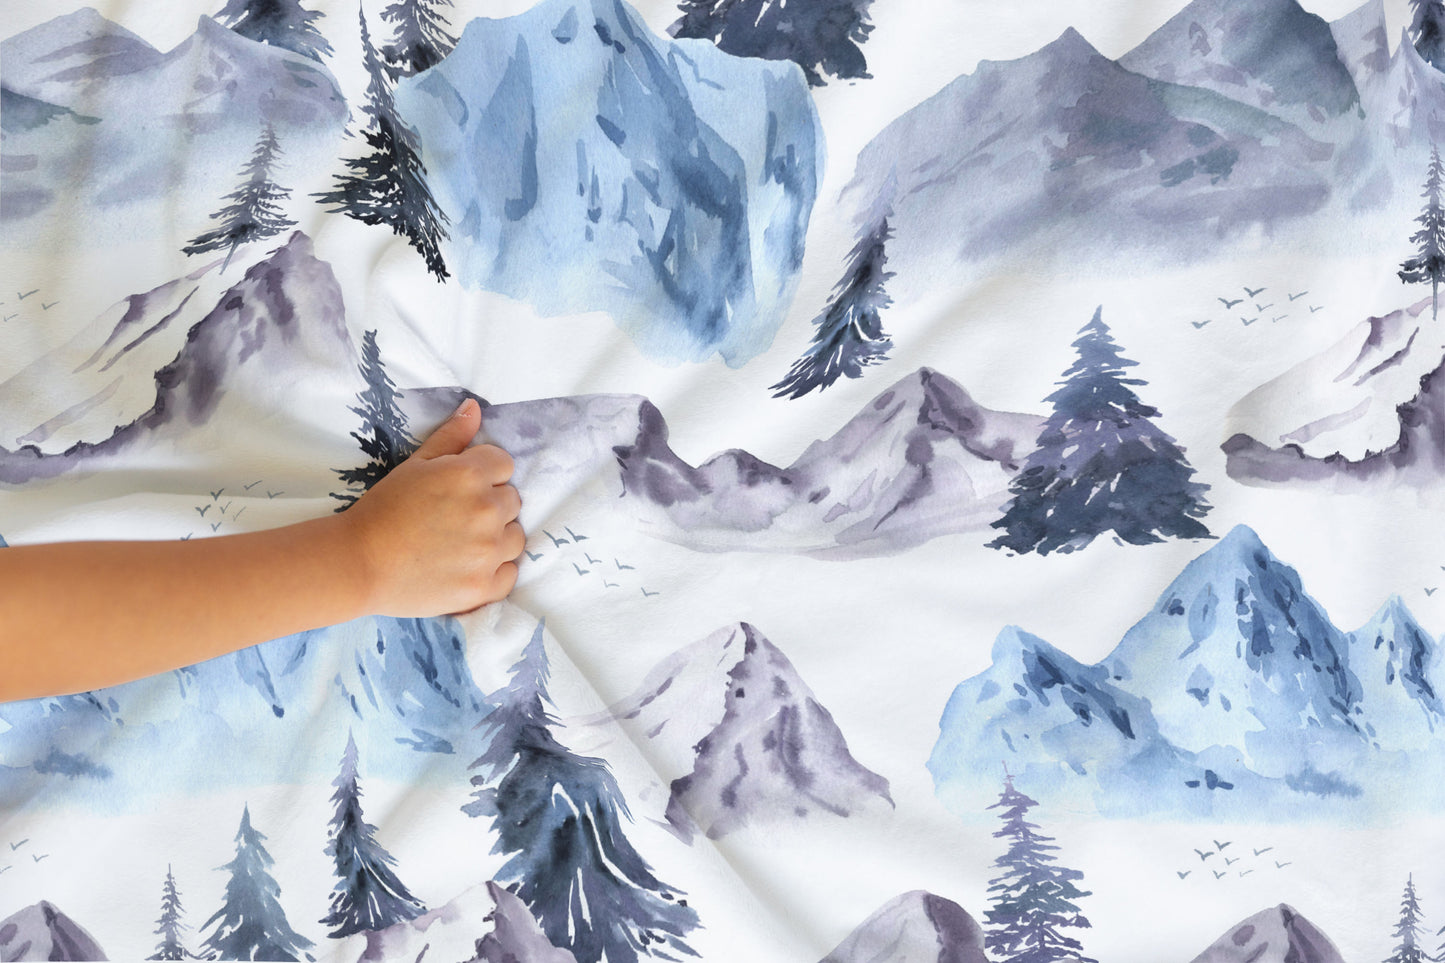 Blue Forest Minky Blanket, Mountain Nursery Bedding - Wild Blue